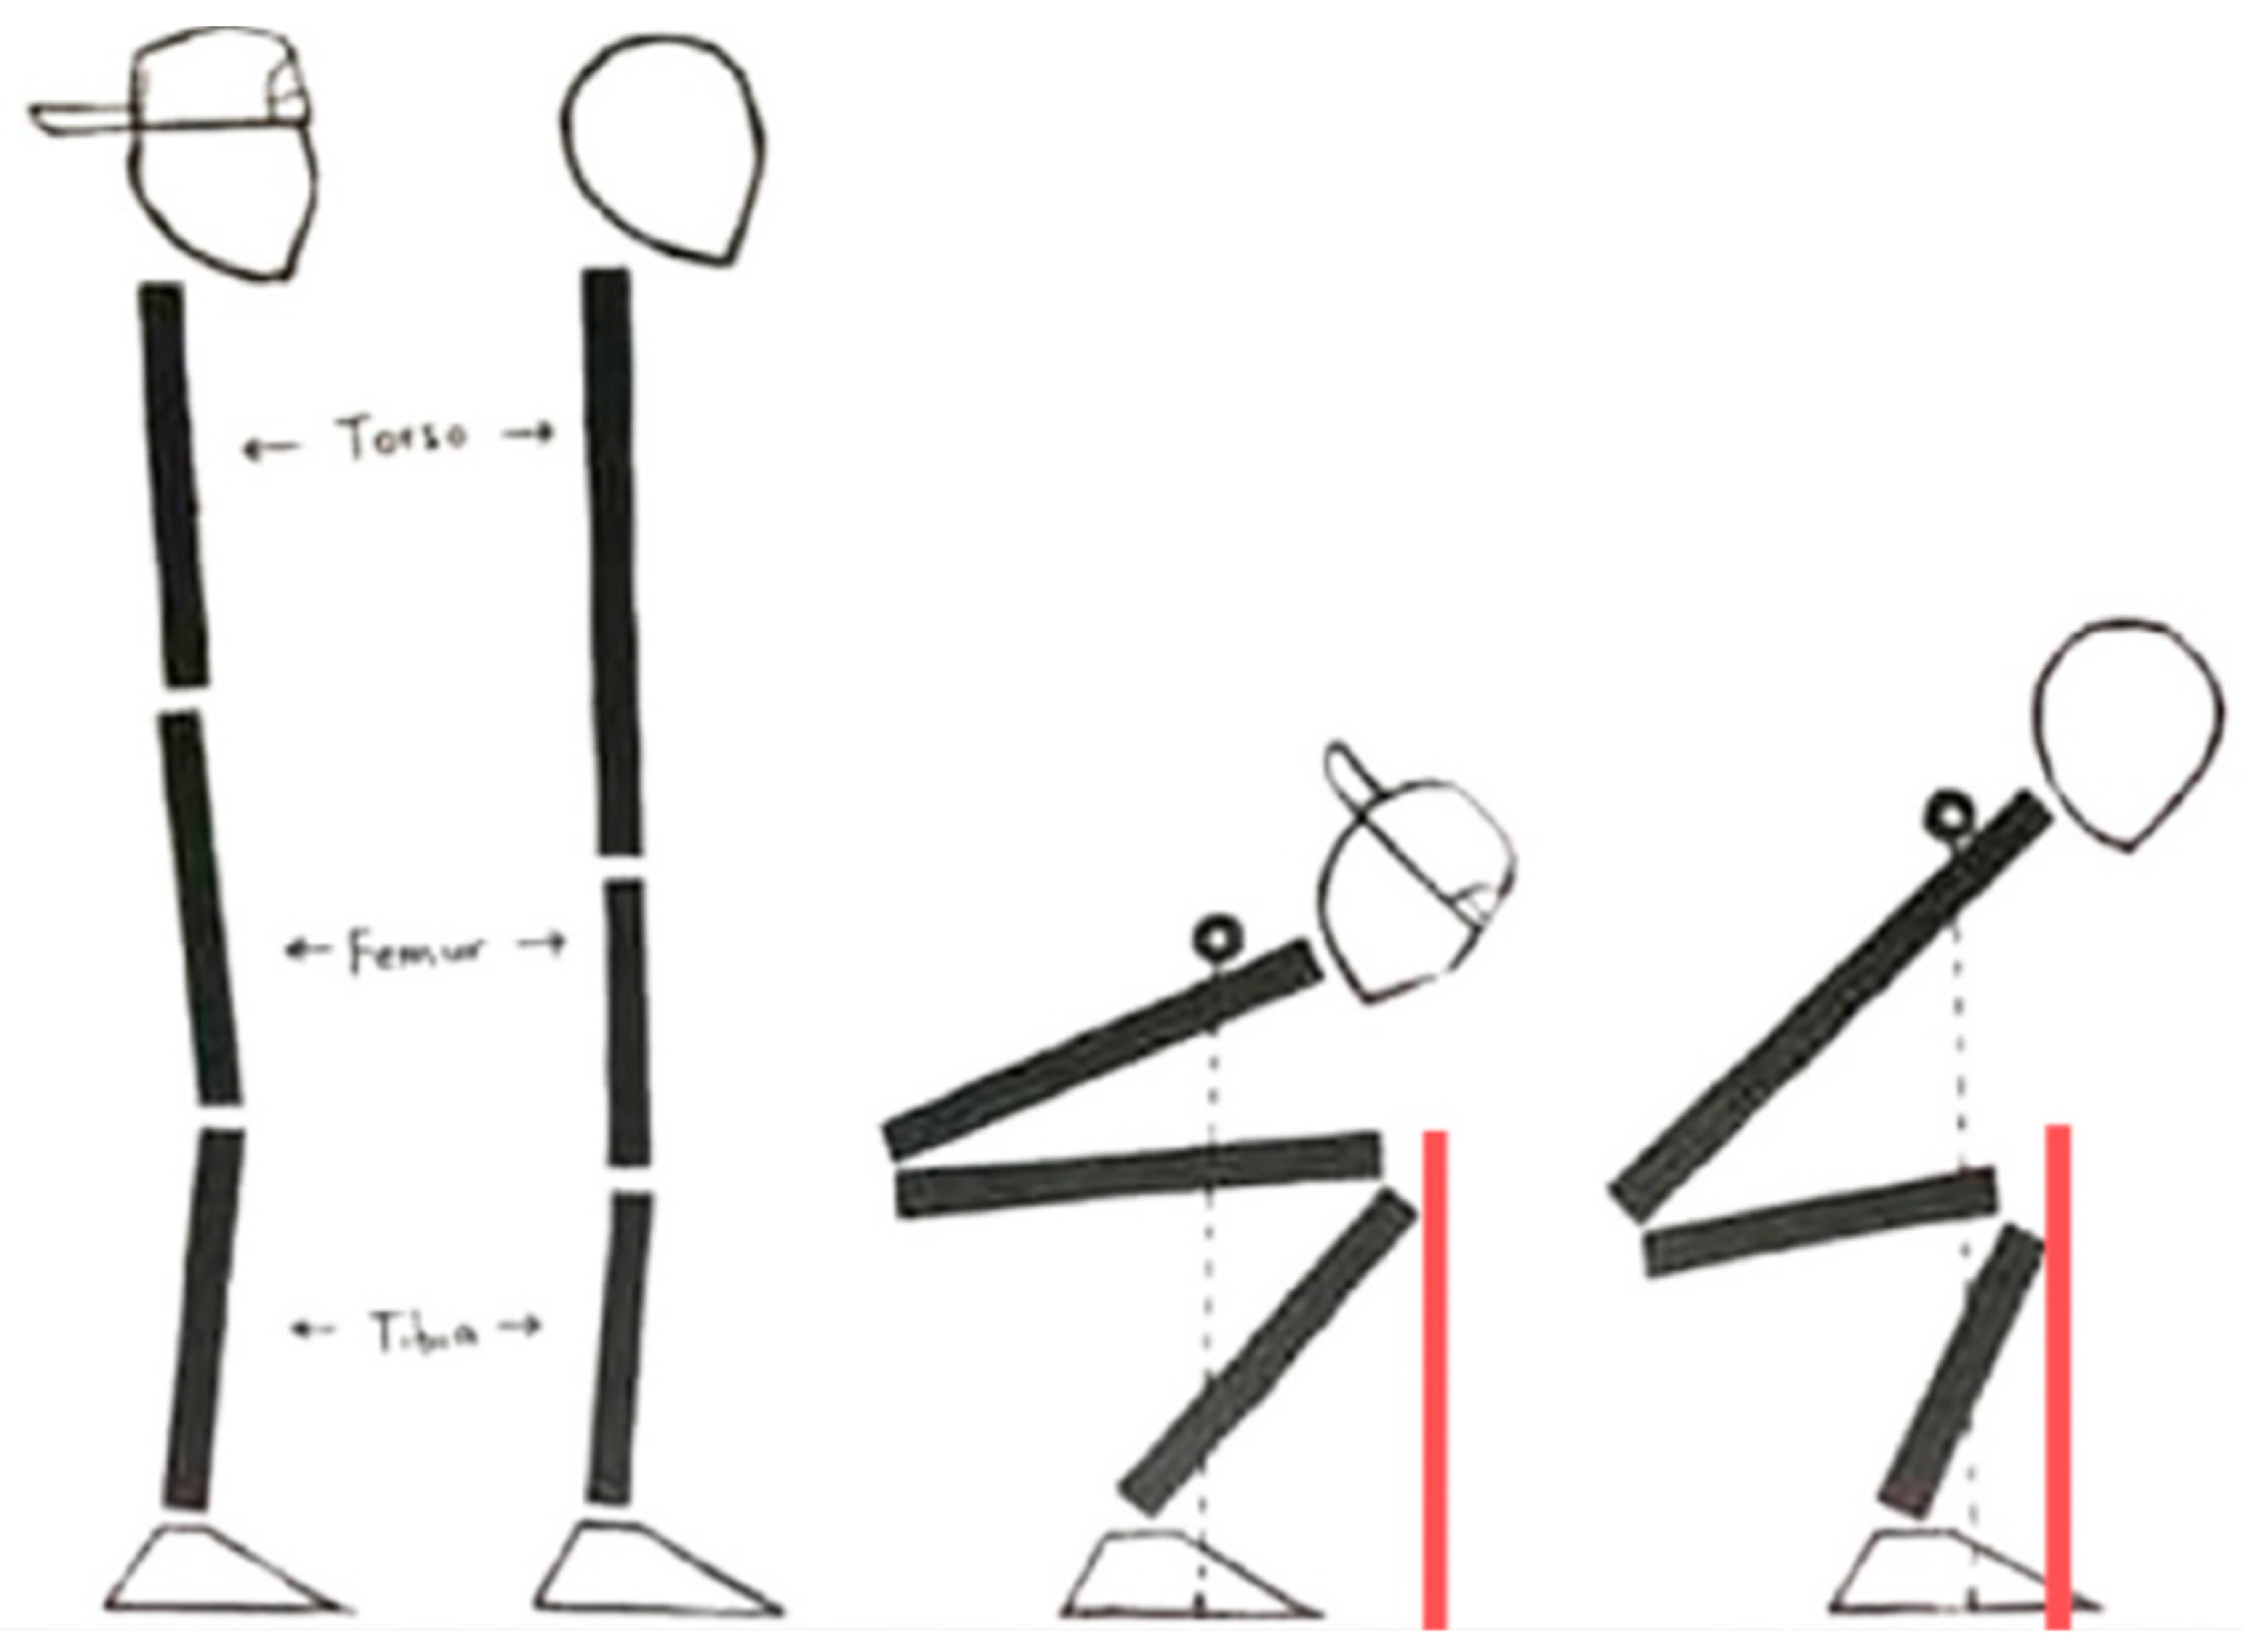 Squat variations and AKD: Low-bar back squat (LBBS, left), deep